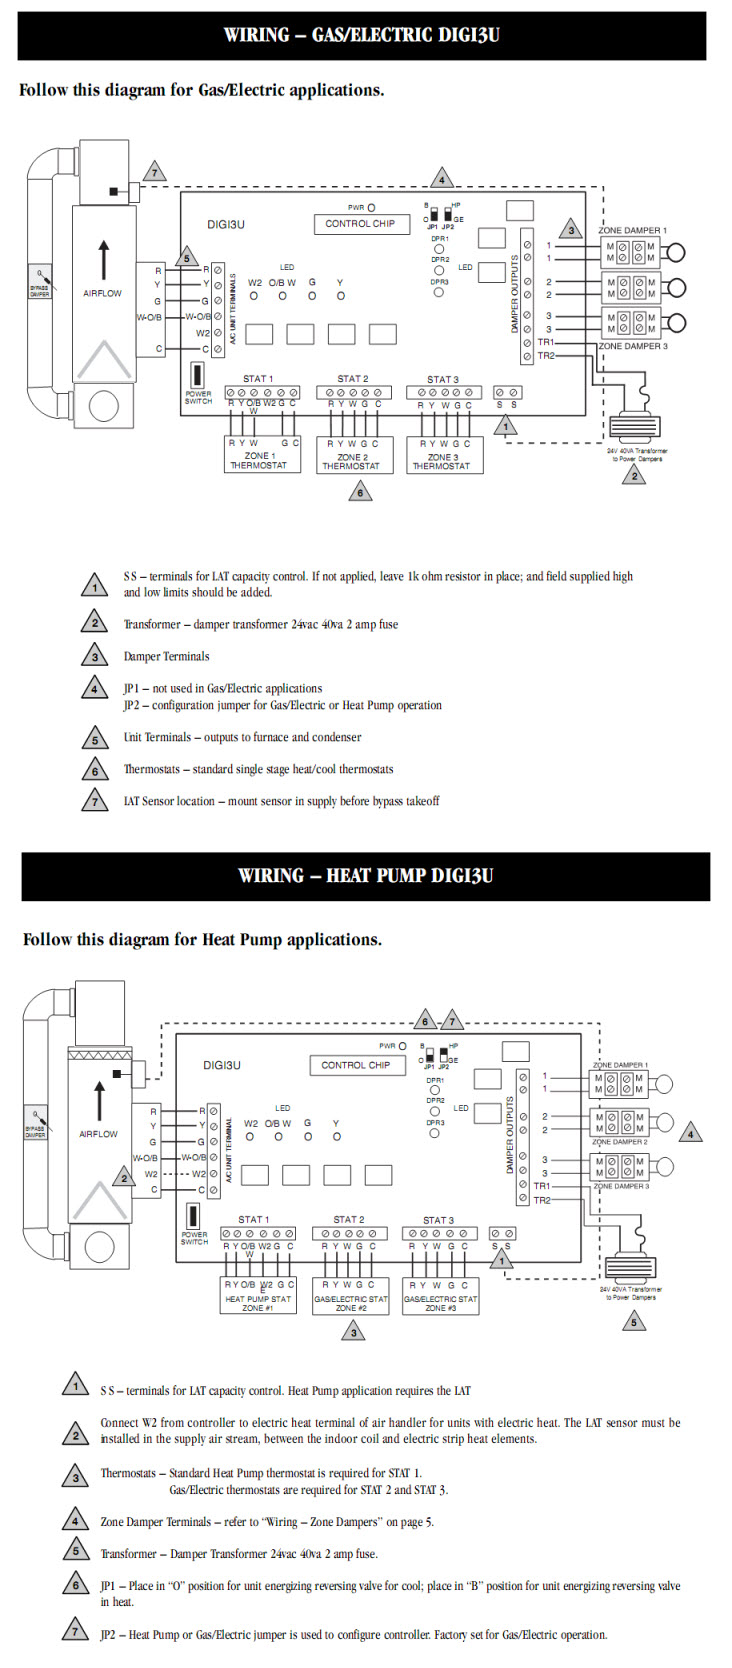 Digitract 3 - Wiring & Schematics | Zonex Systems - VRF ... thermal zone wiring diagram 